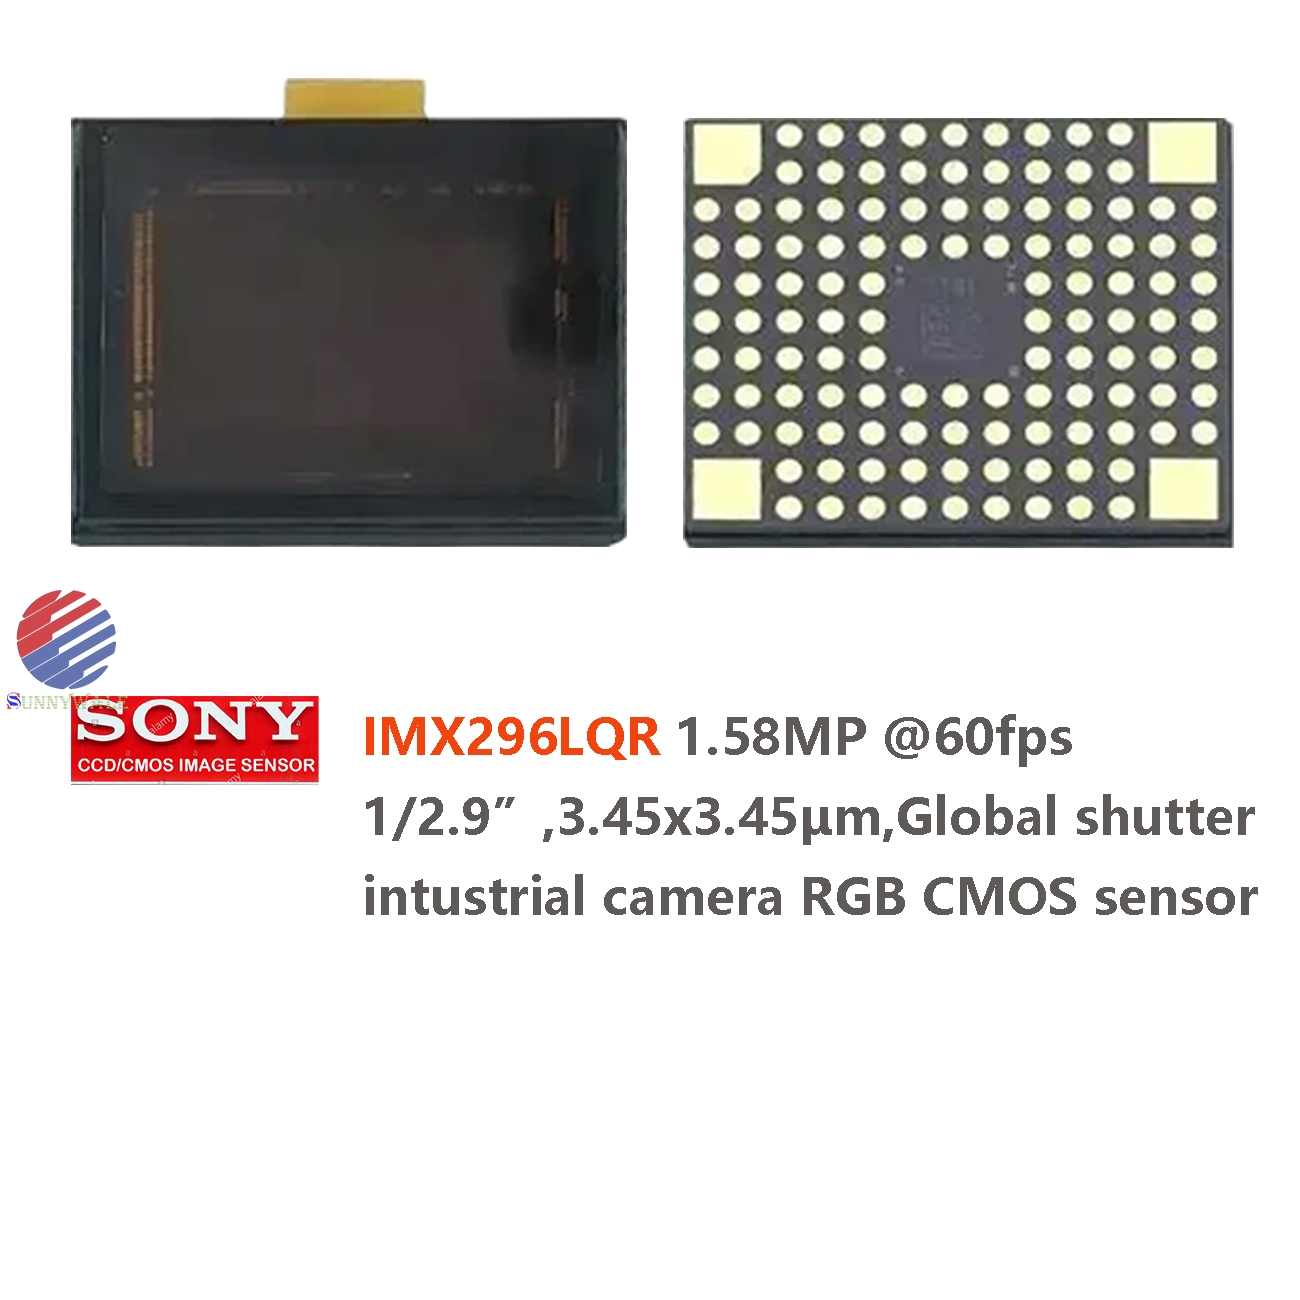 IMX296LQR-C， SONY 1/2.9 ，1546x1080p，1.58MP@60fps, 3.45 μm×3.45 μm， 10bit， Global shutter ， RGB CMOS SENSOR，industrial camera sensor